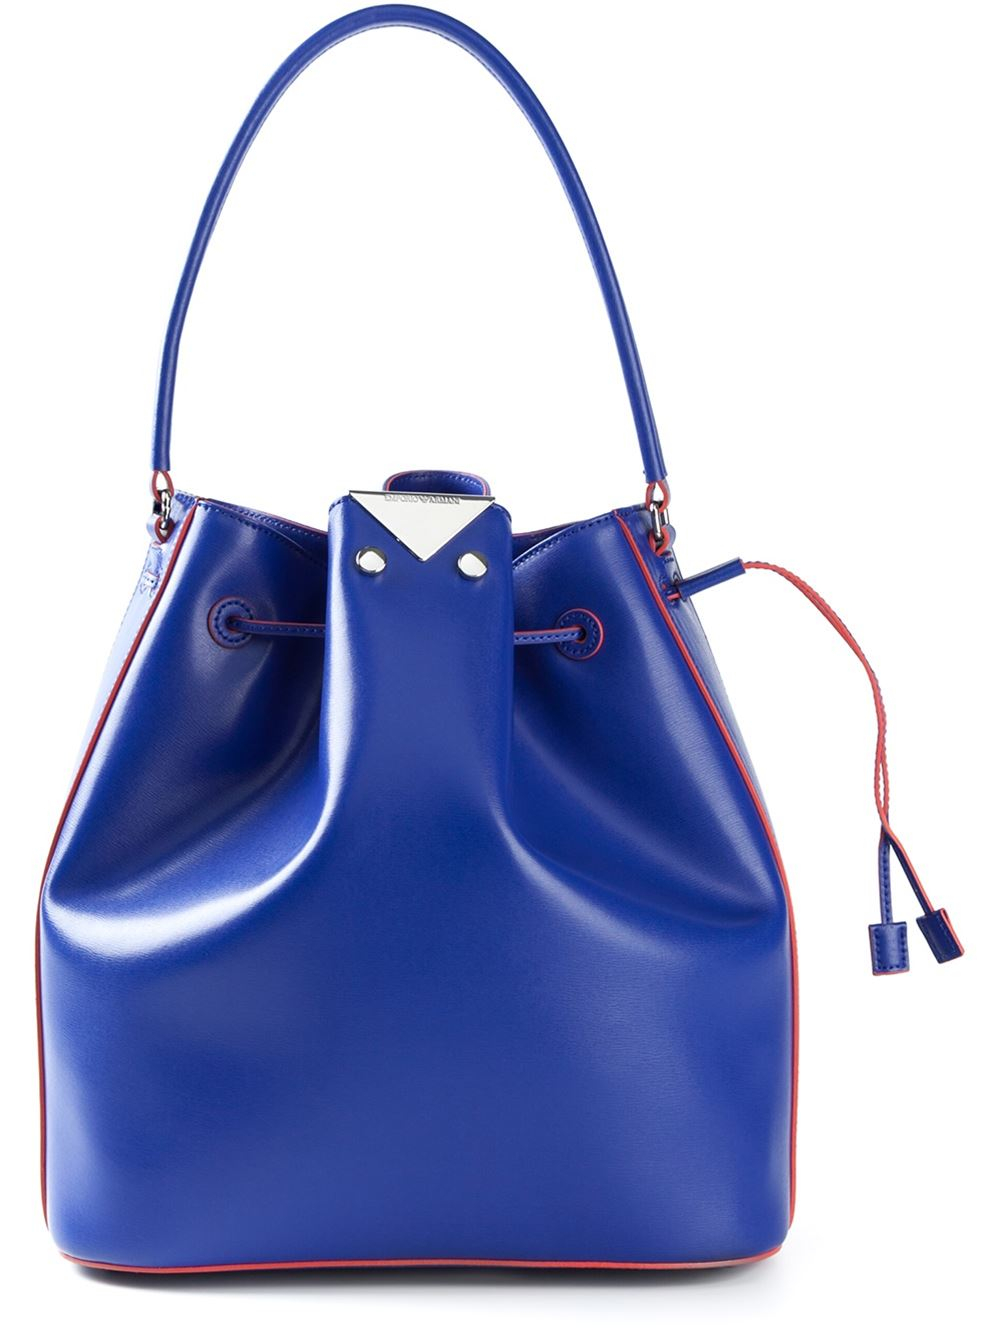 Emporio Armani bags. Emporio Armani women Myea handbags marrone.